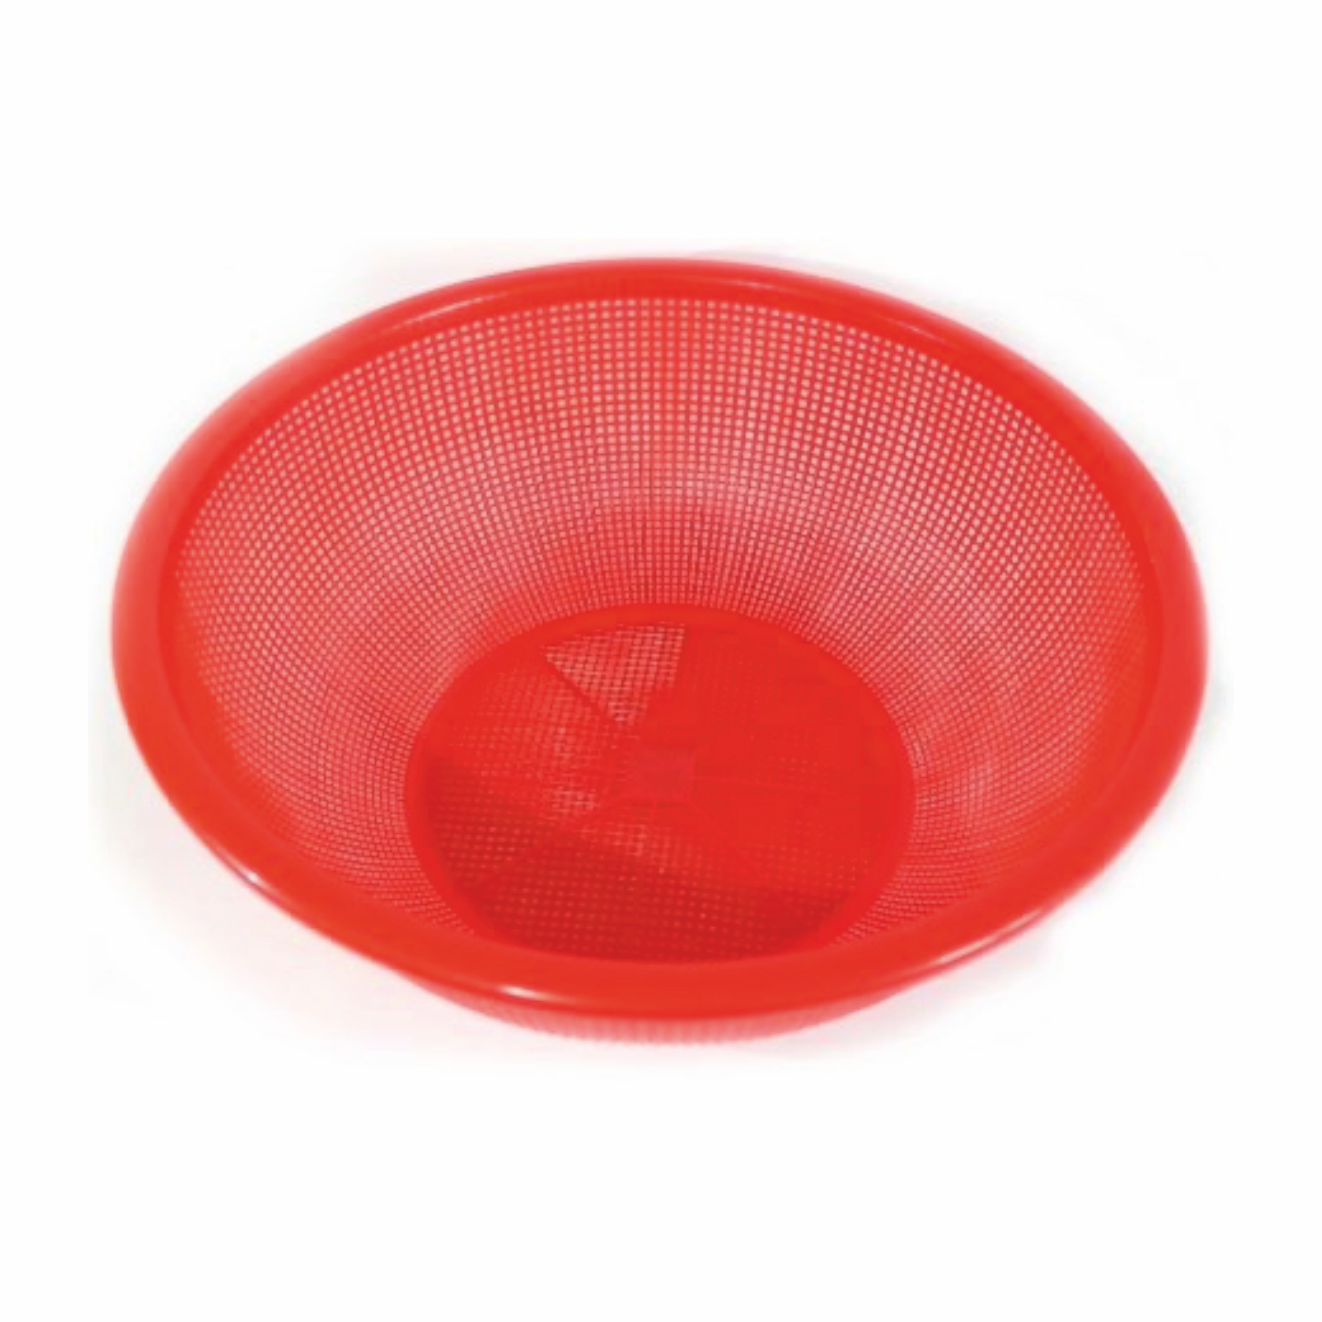 Стечка для икры пластиковая круглая красная